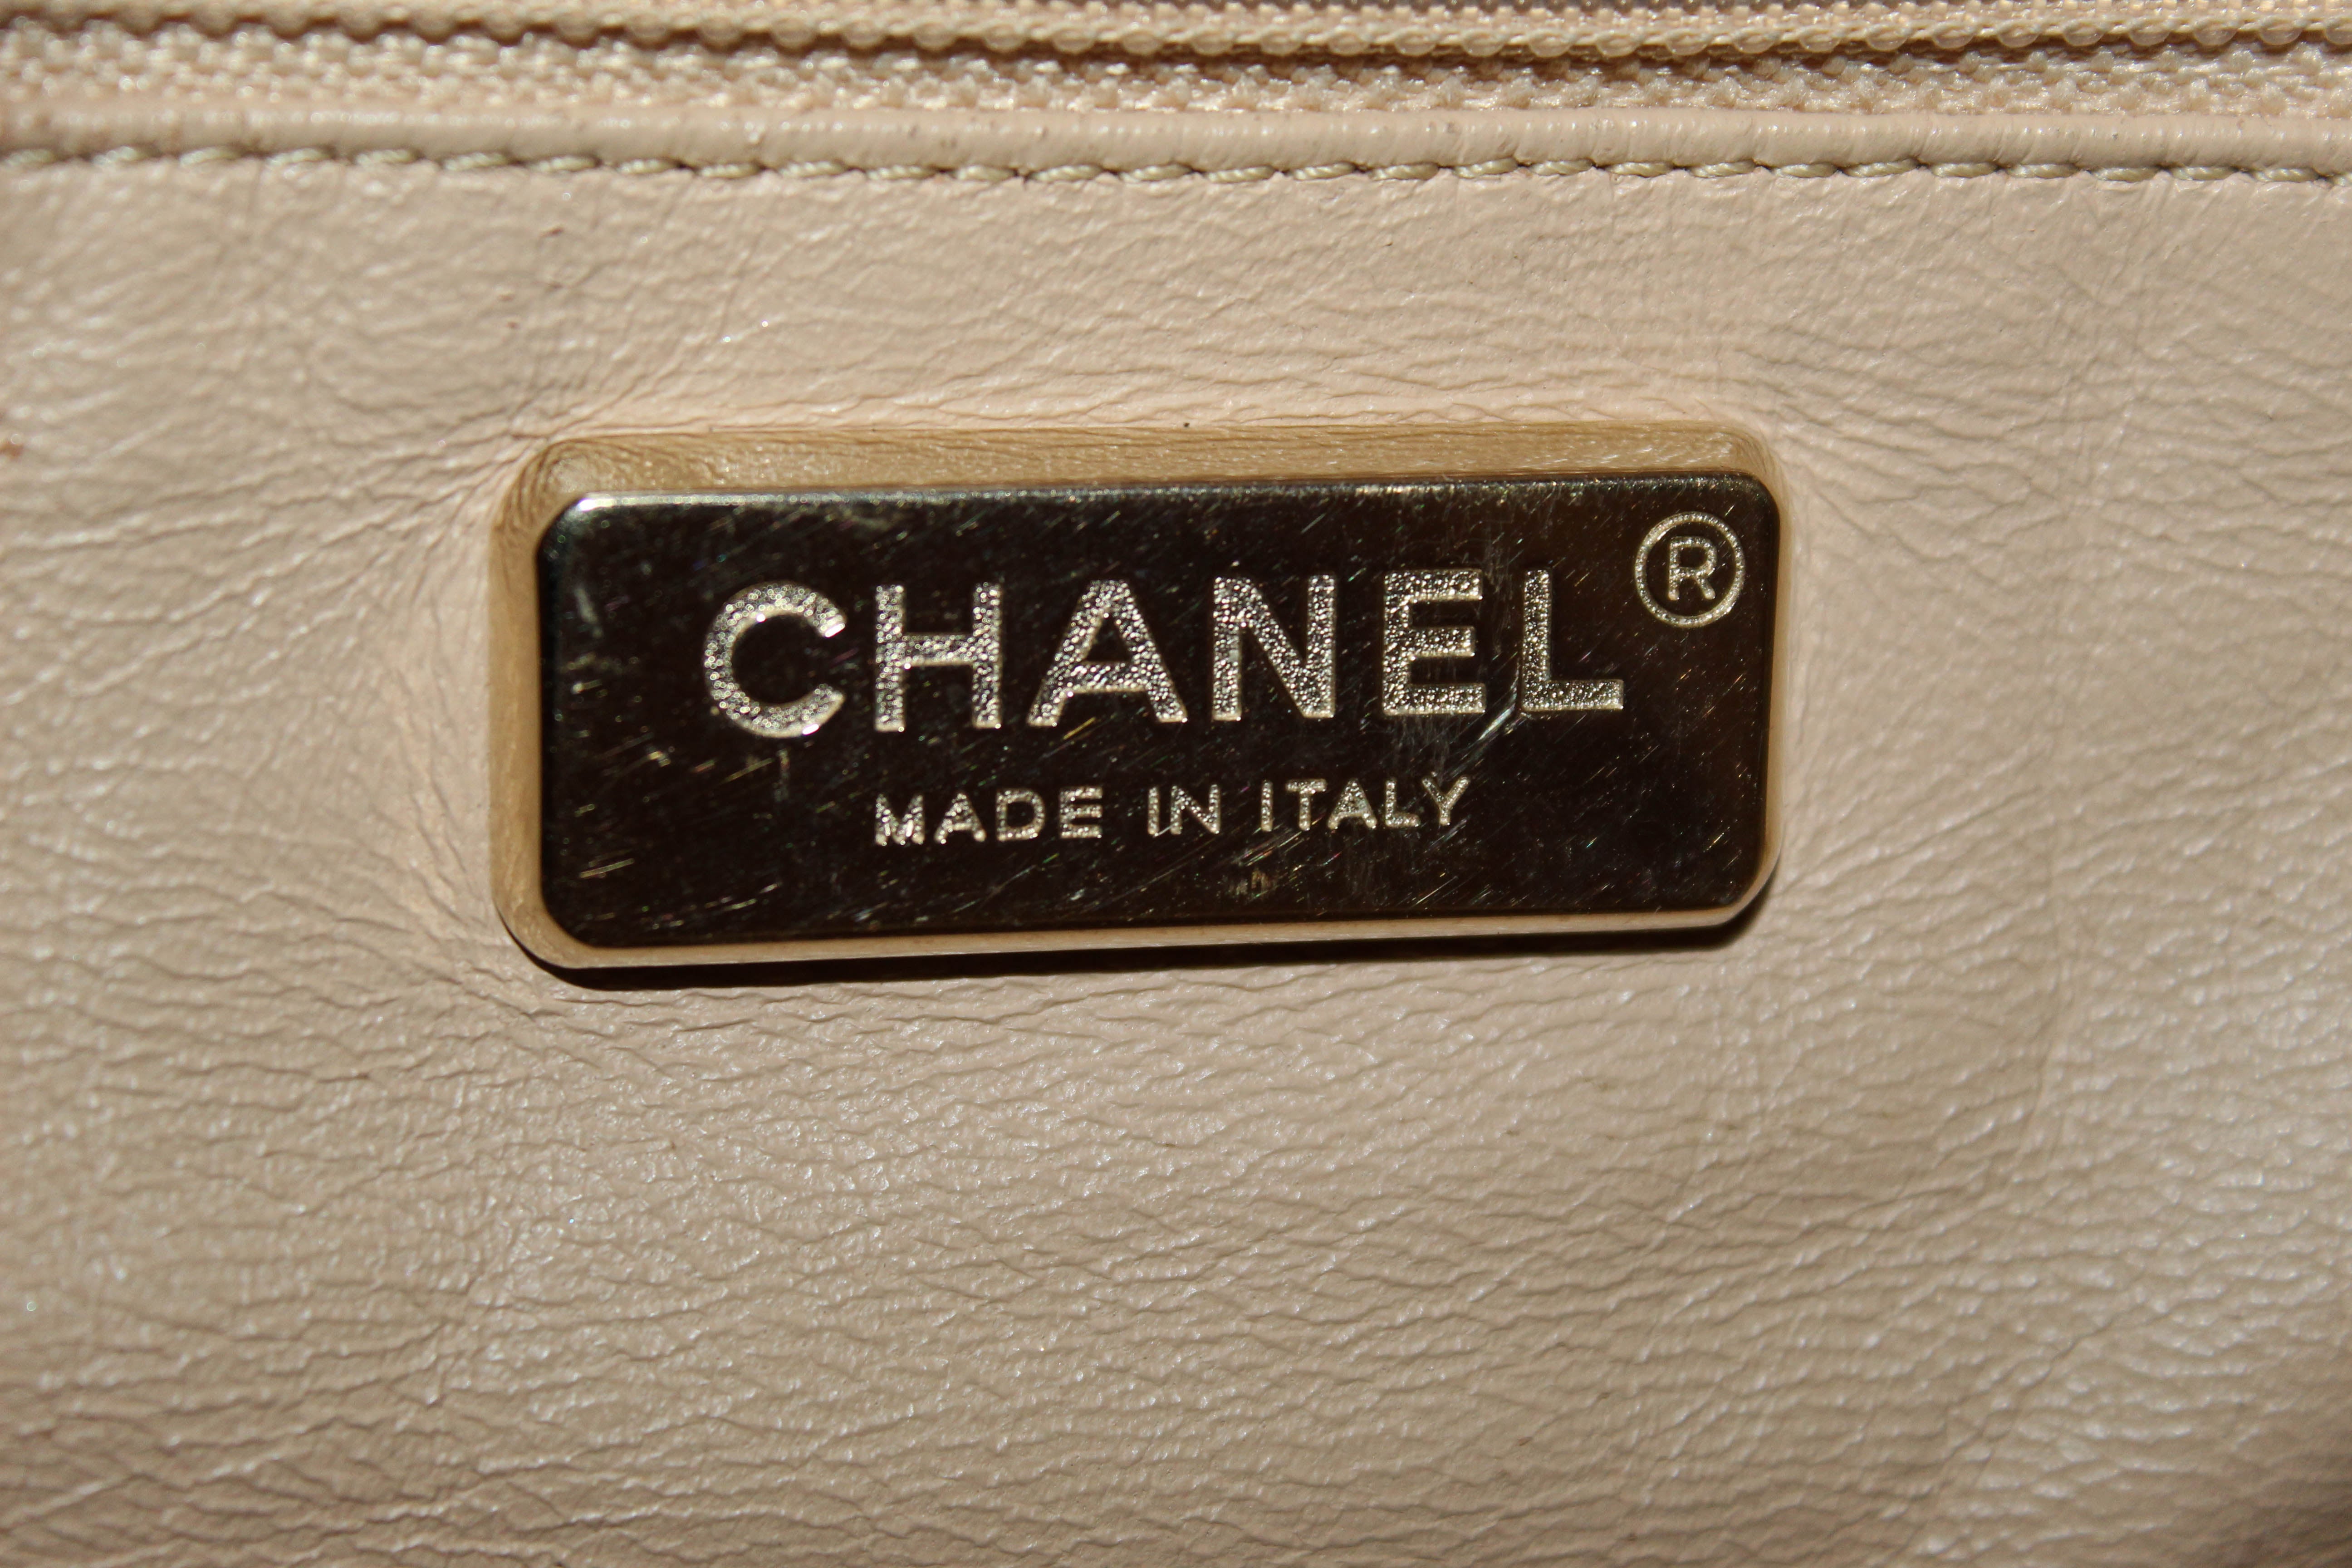 Authentic Chanel Metallic Gold Chain Around Shoulder Bag